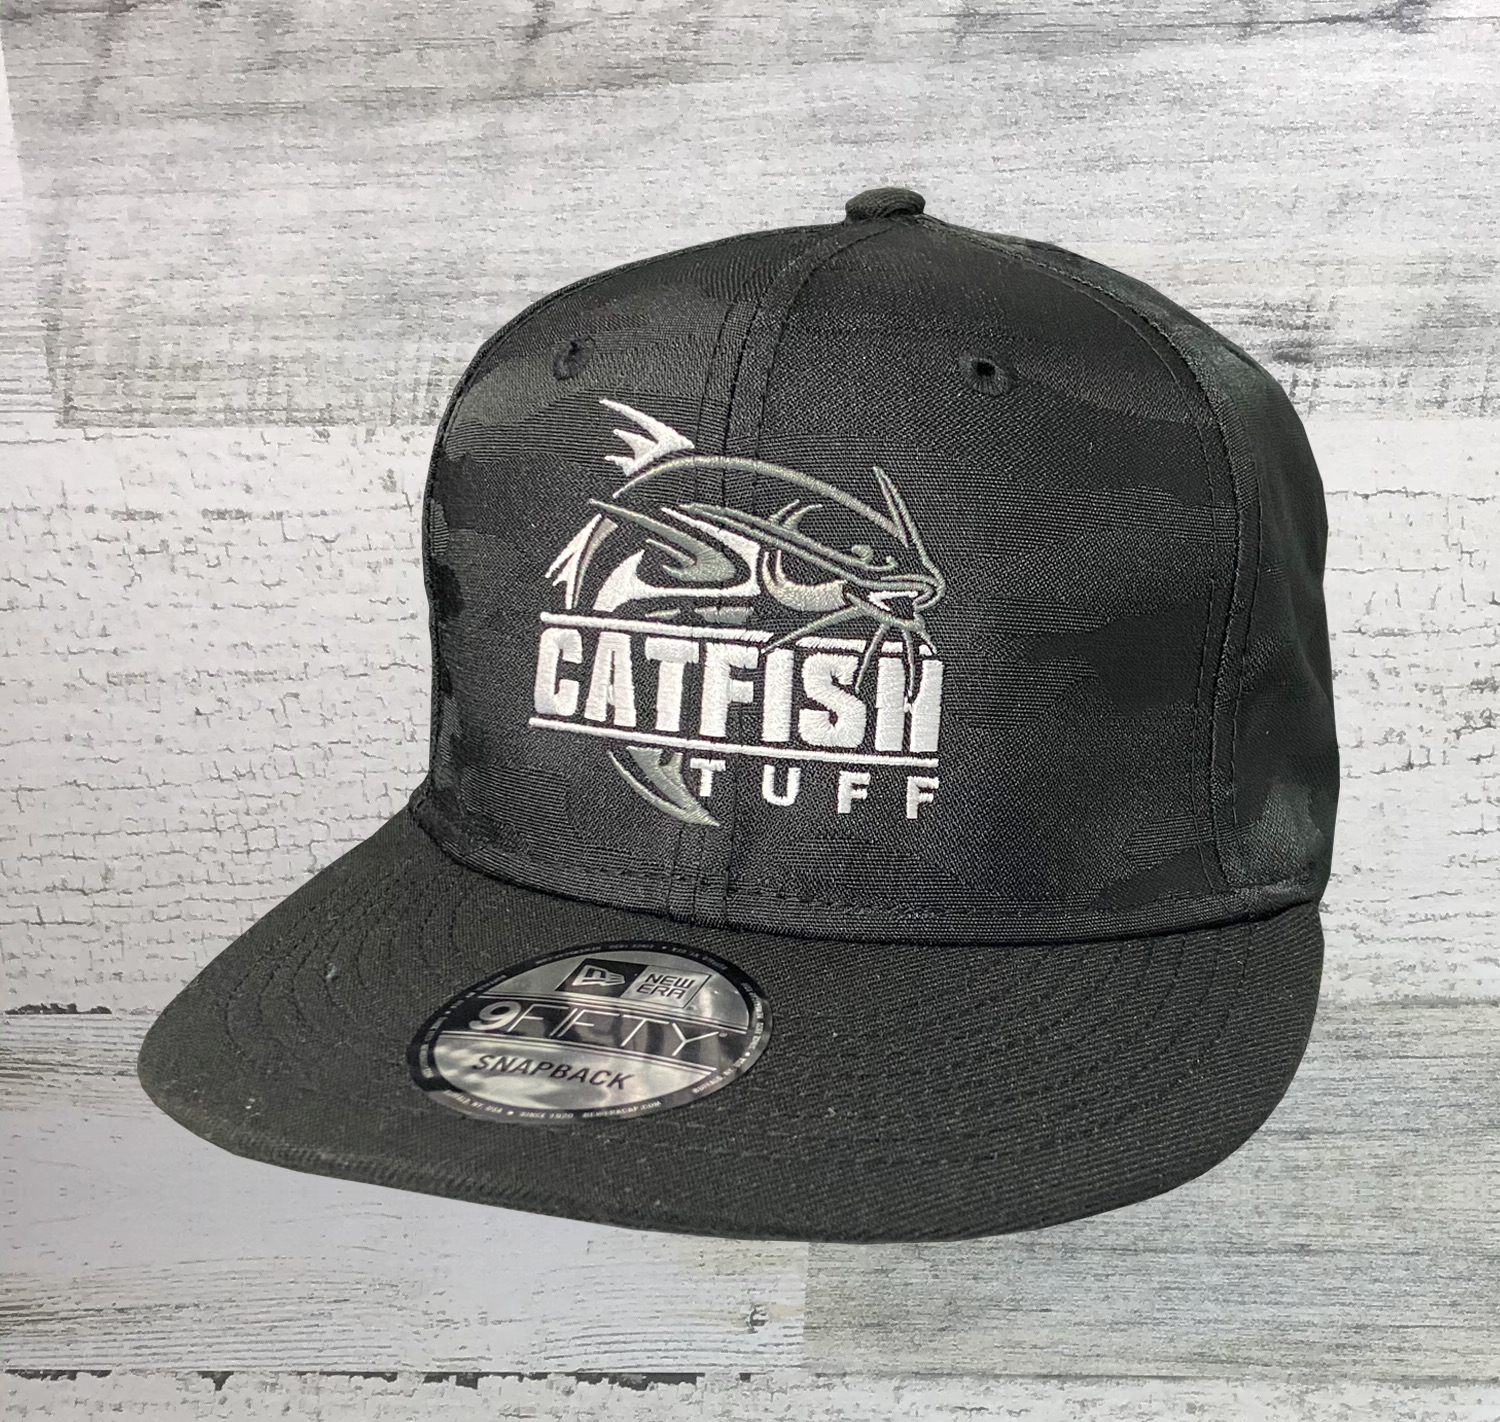 Flat Bill - Catfish hat - Fishing Hat - New Era ® Tonal Black Camo Cap -  Hook & Drag